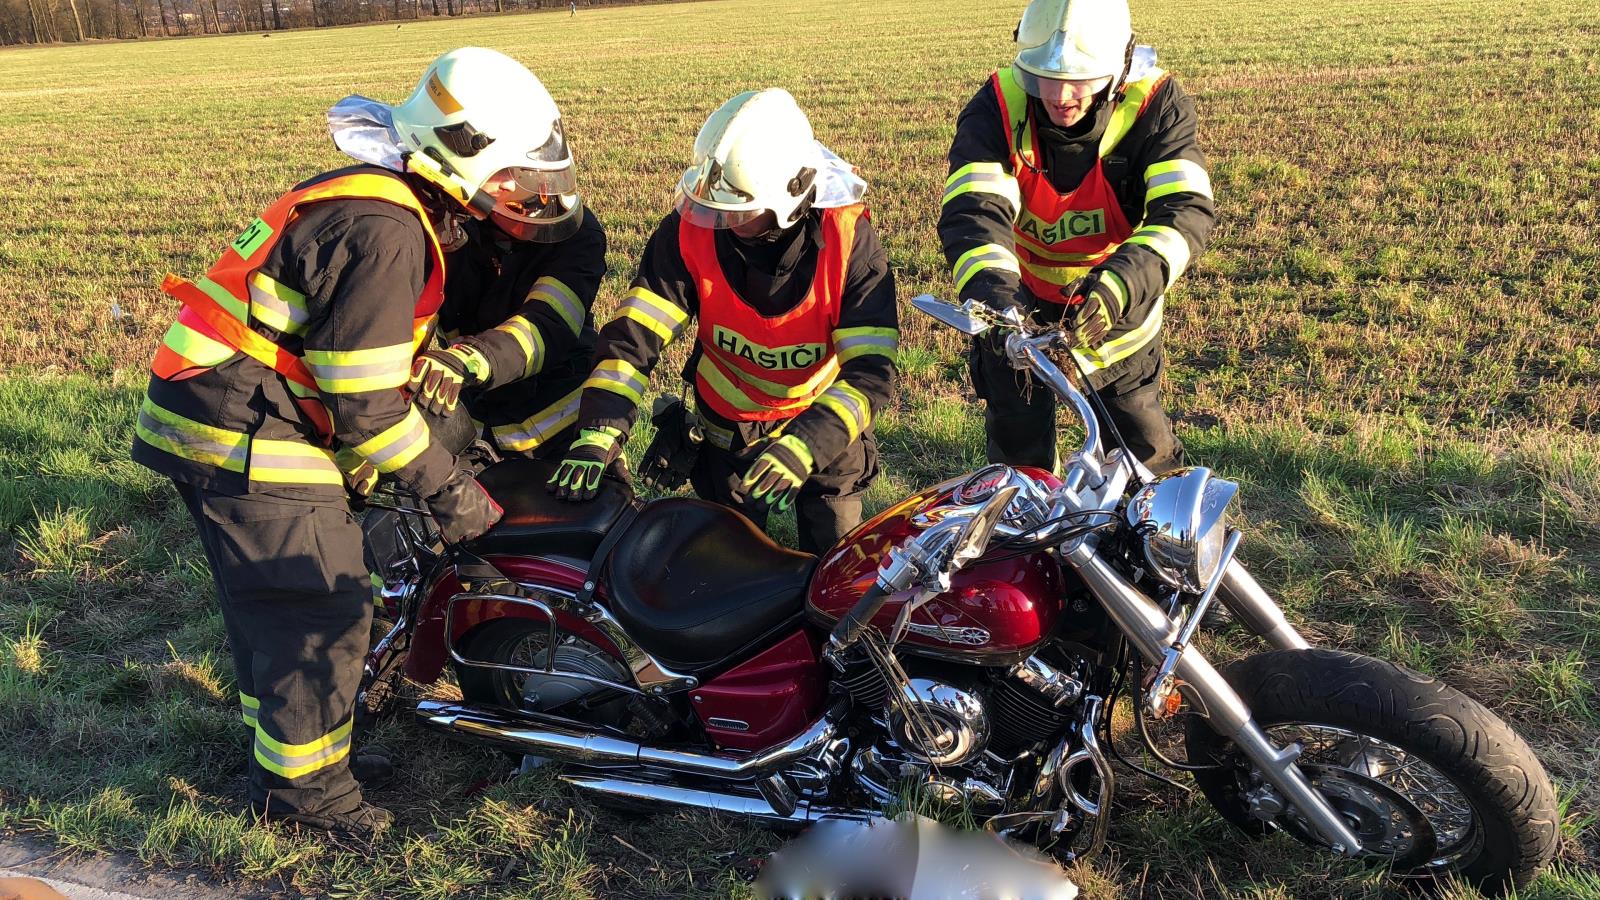 vazna nehoda motocykl a osobni vozidlo Bohunovice